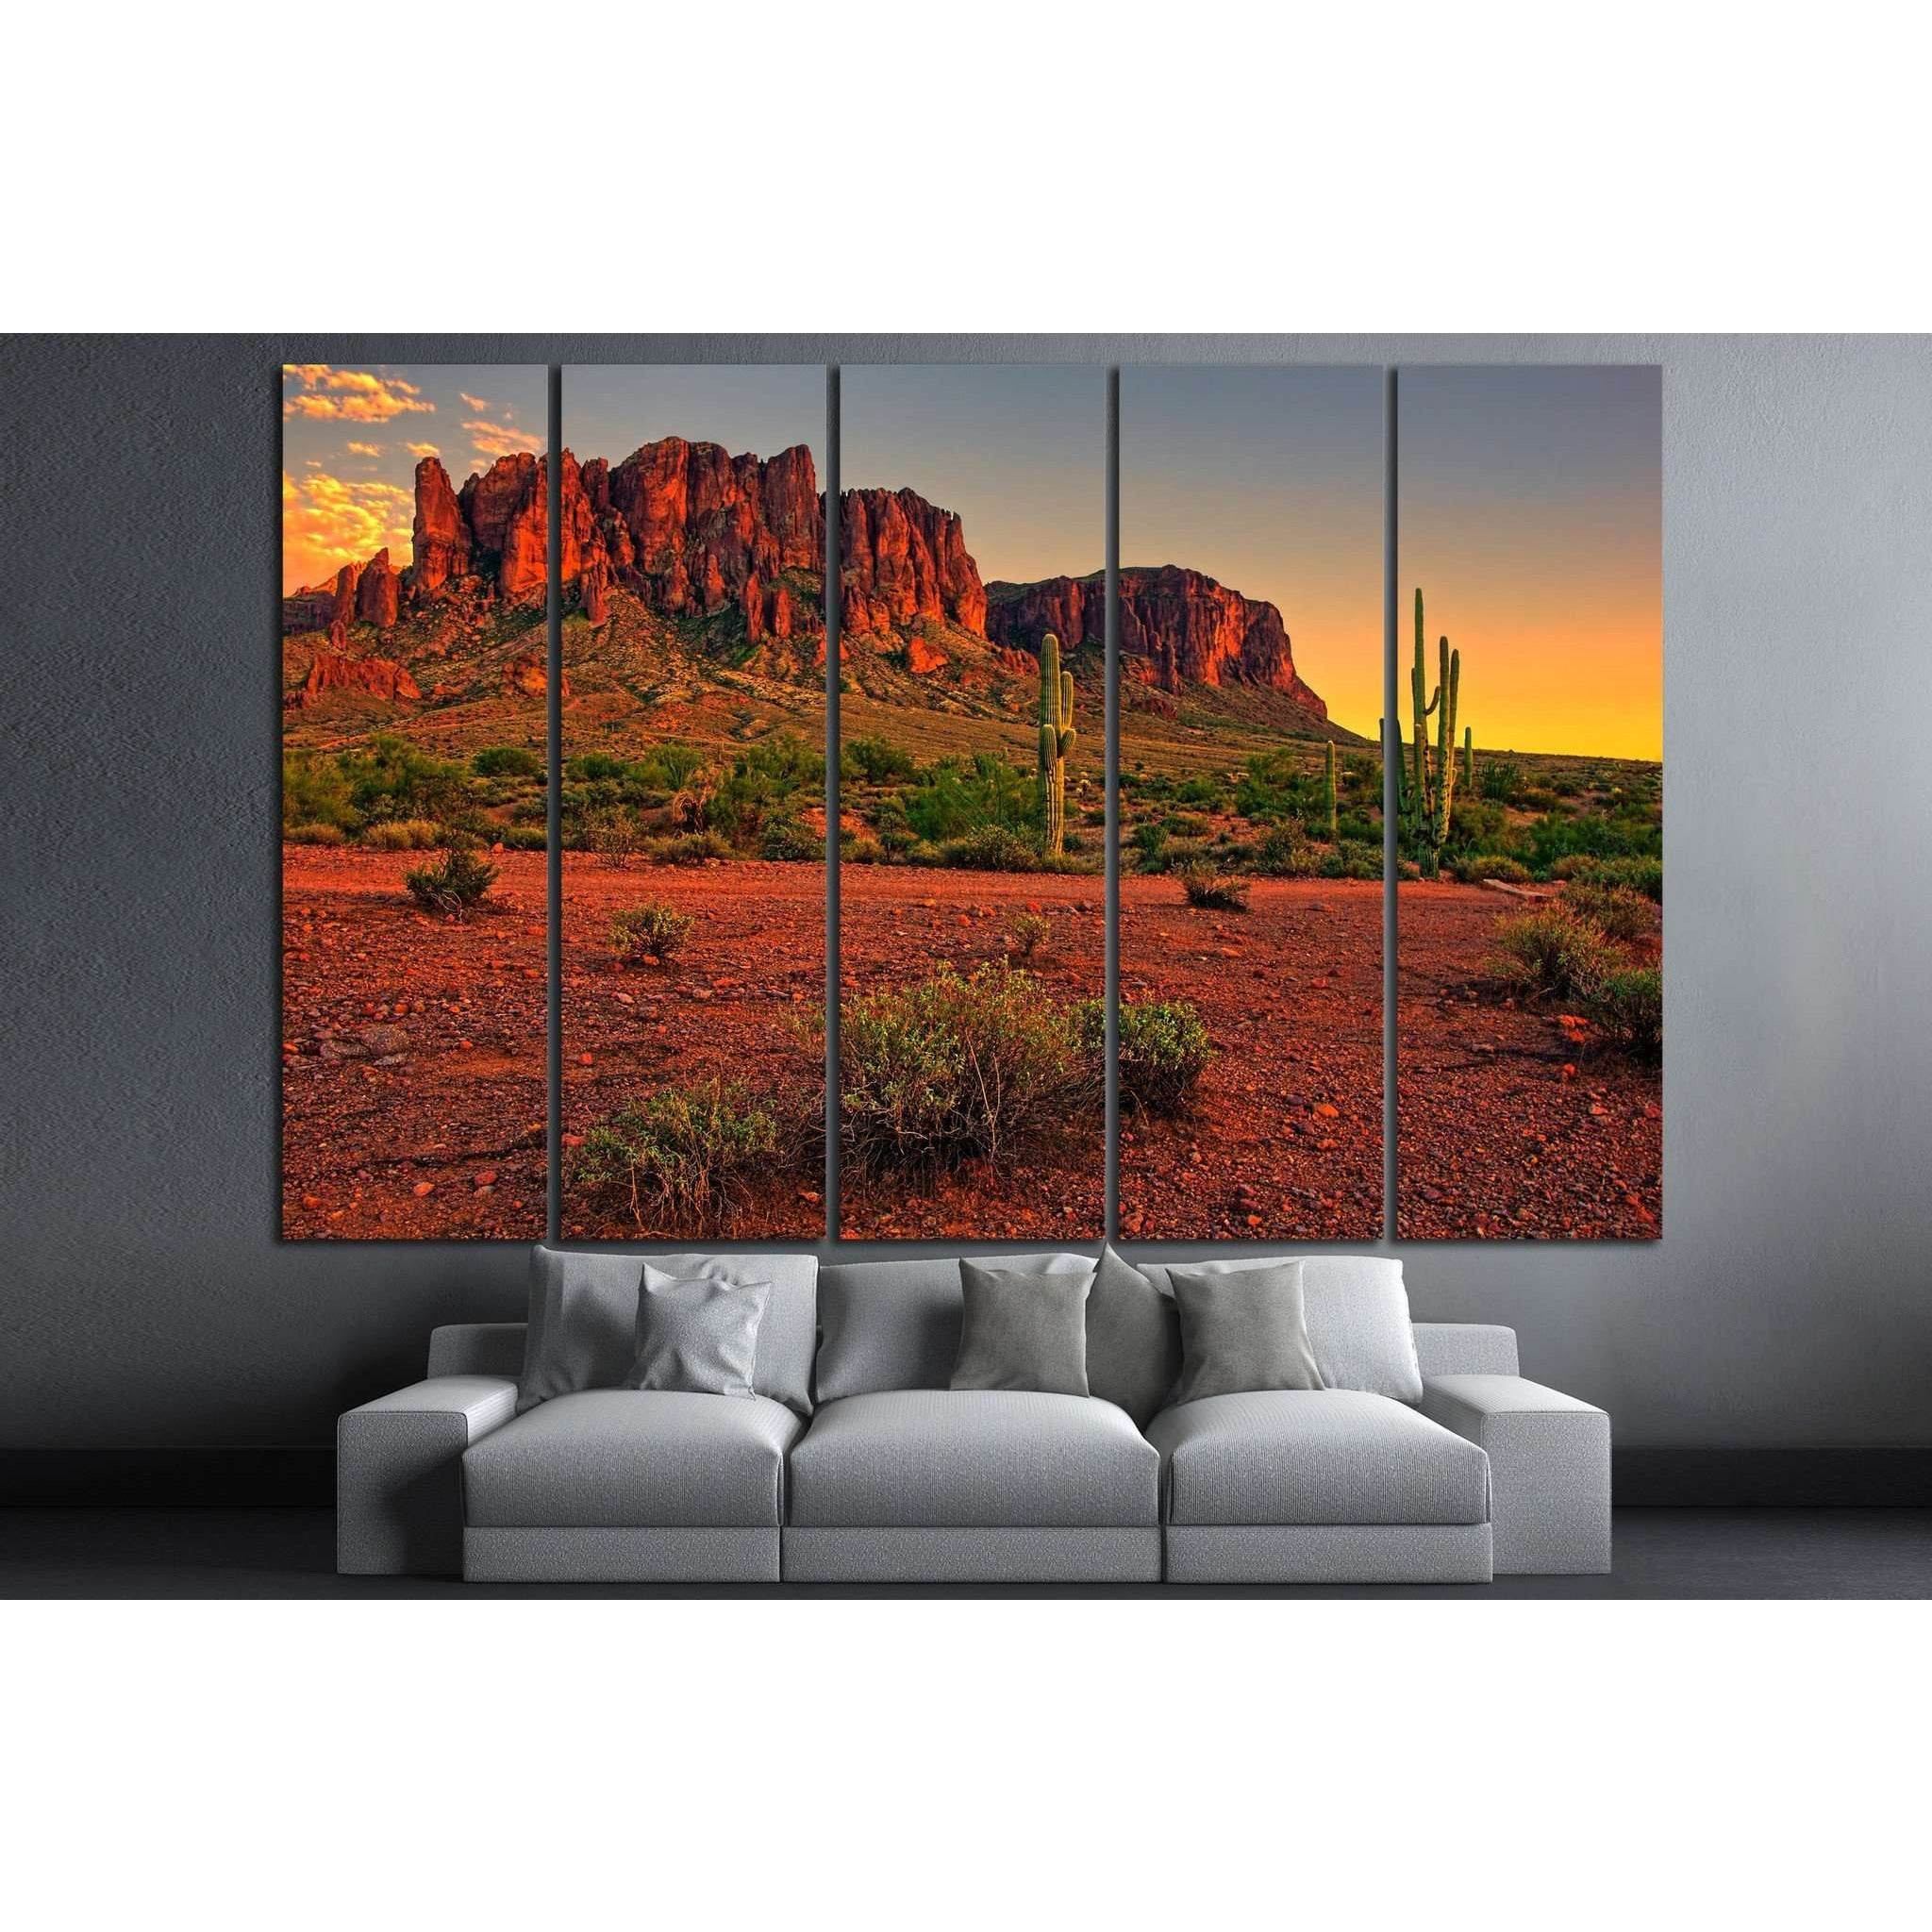 Phoenix, Arizona, USA №890 Ready to Hang Canvas Print